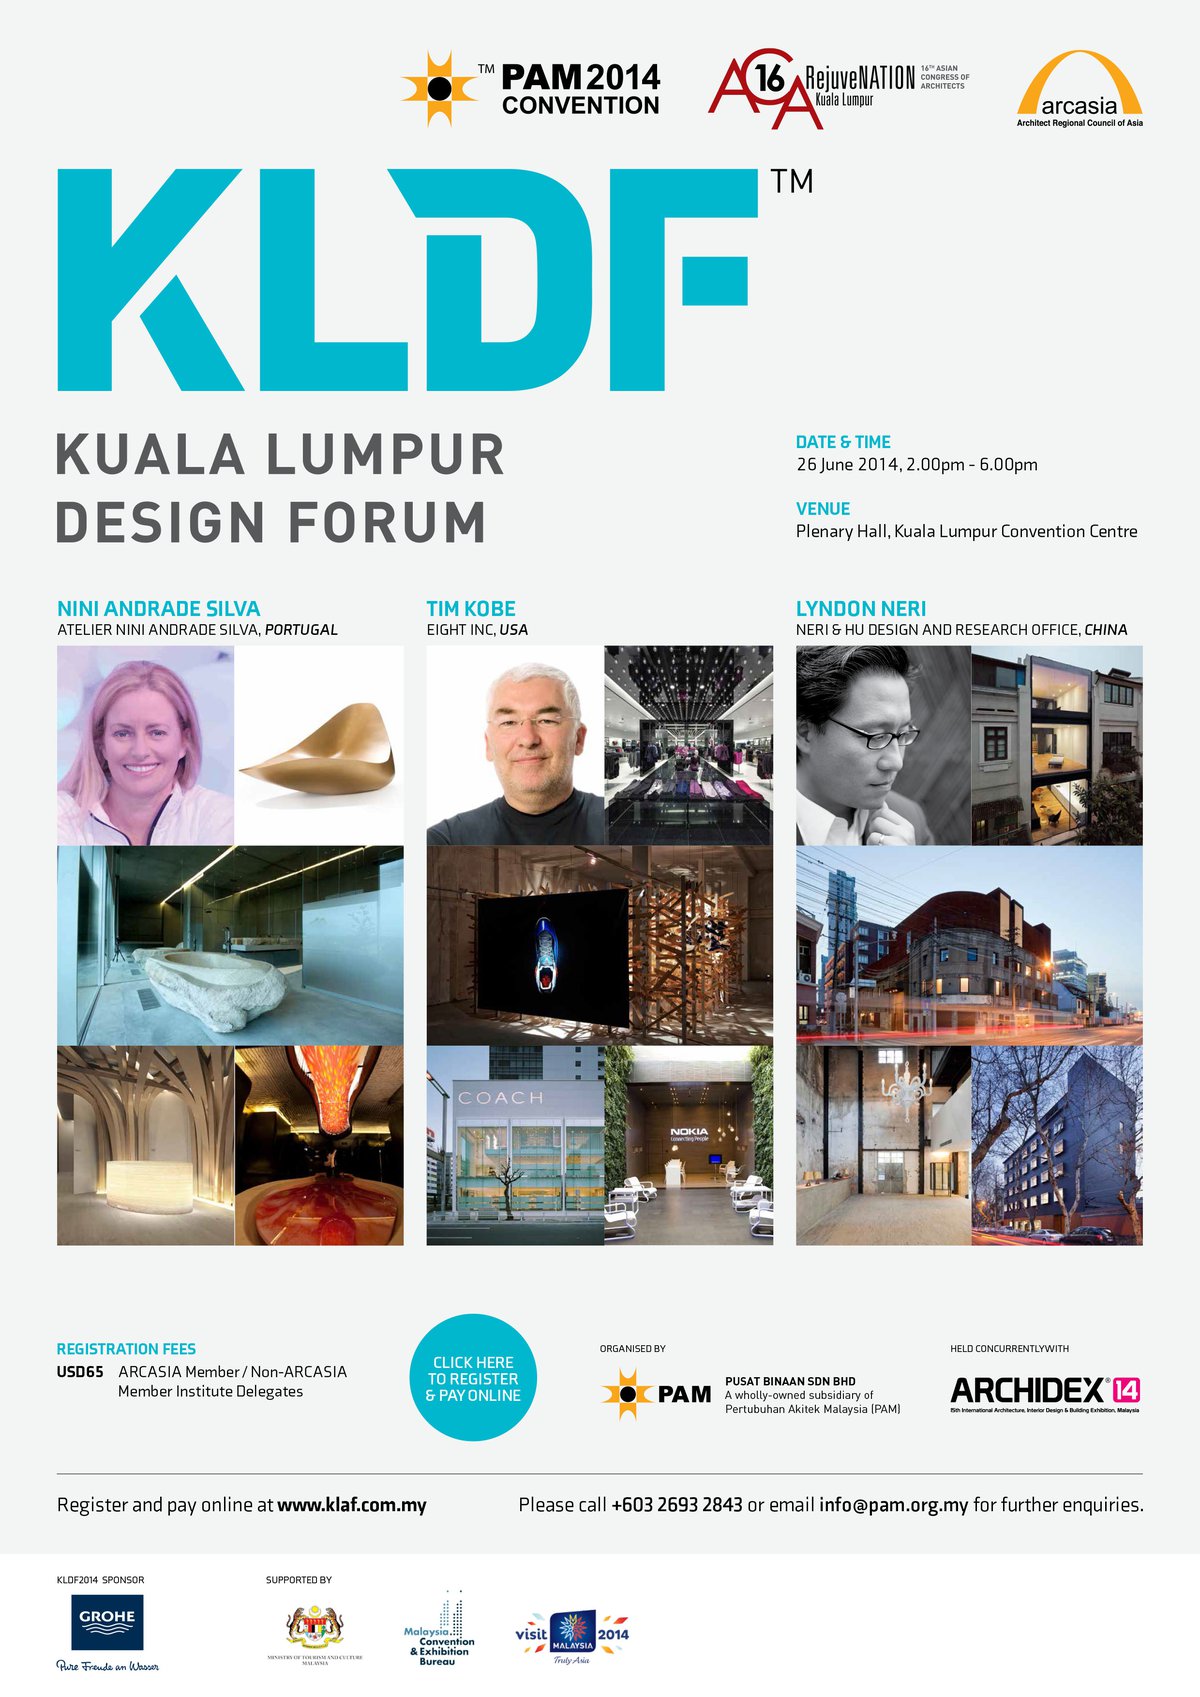 Kuala Lumpur Design Forum